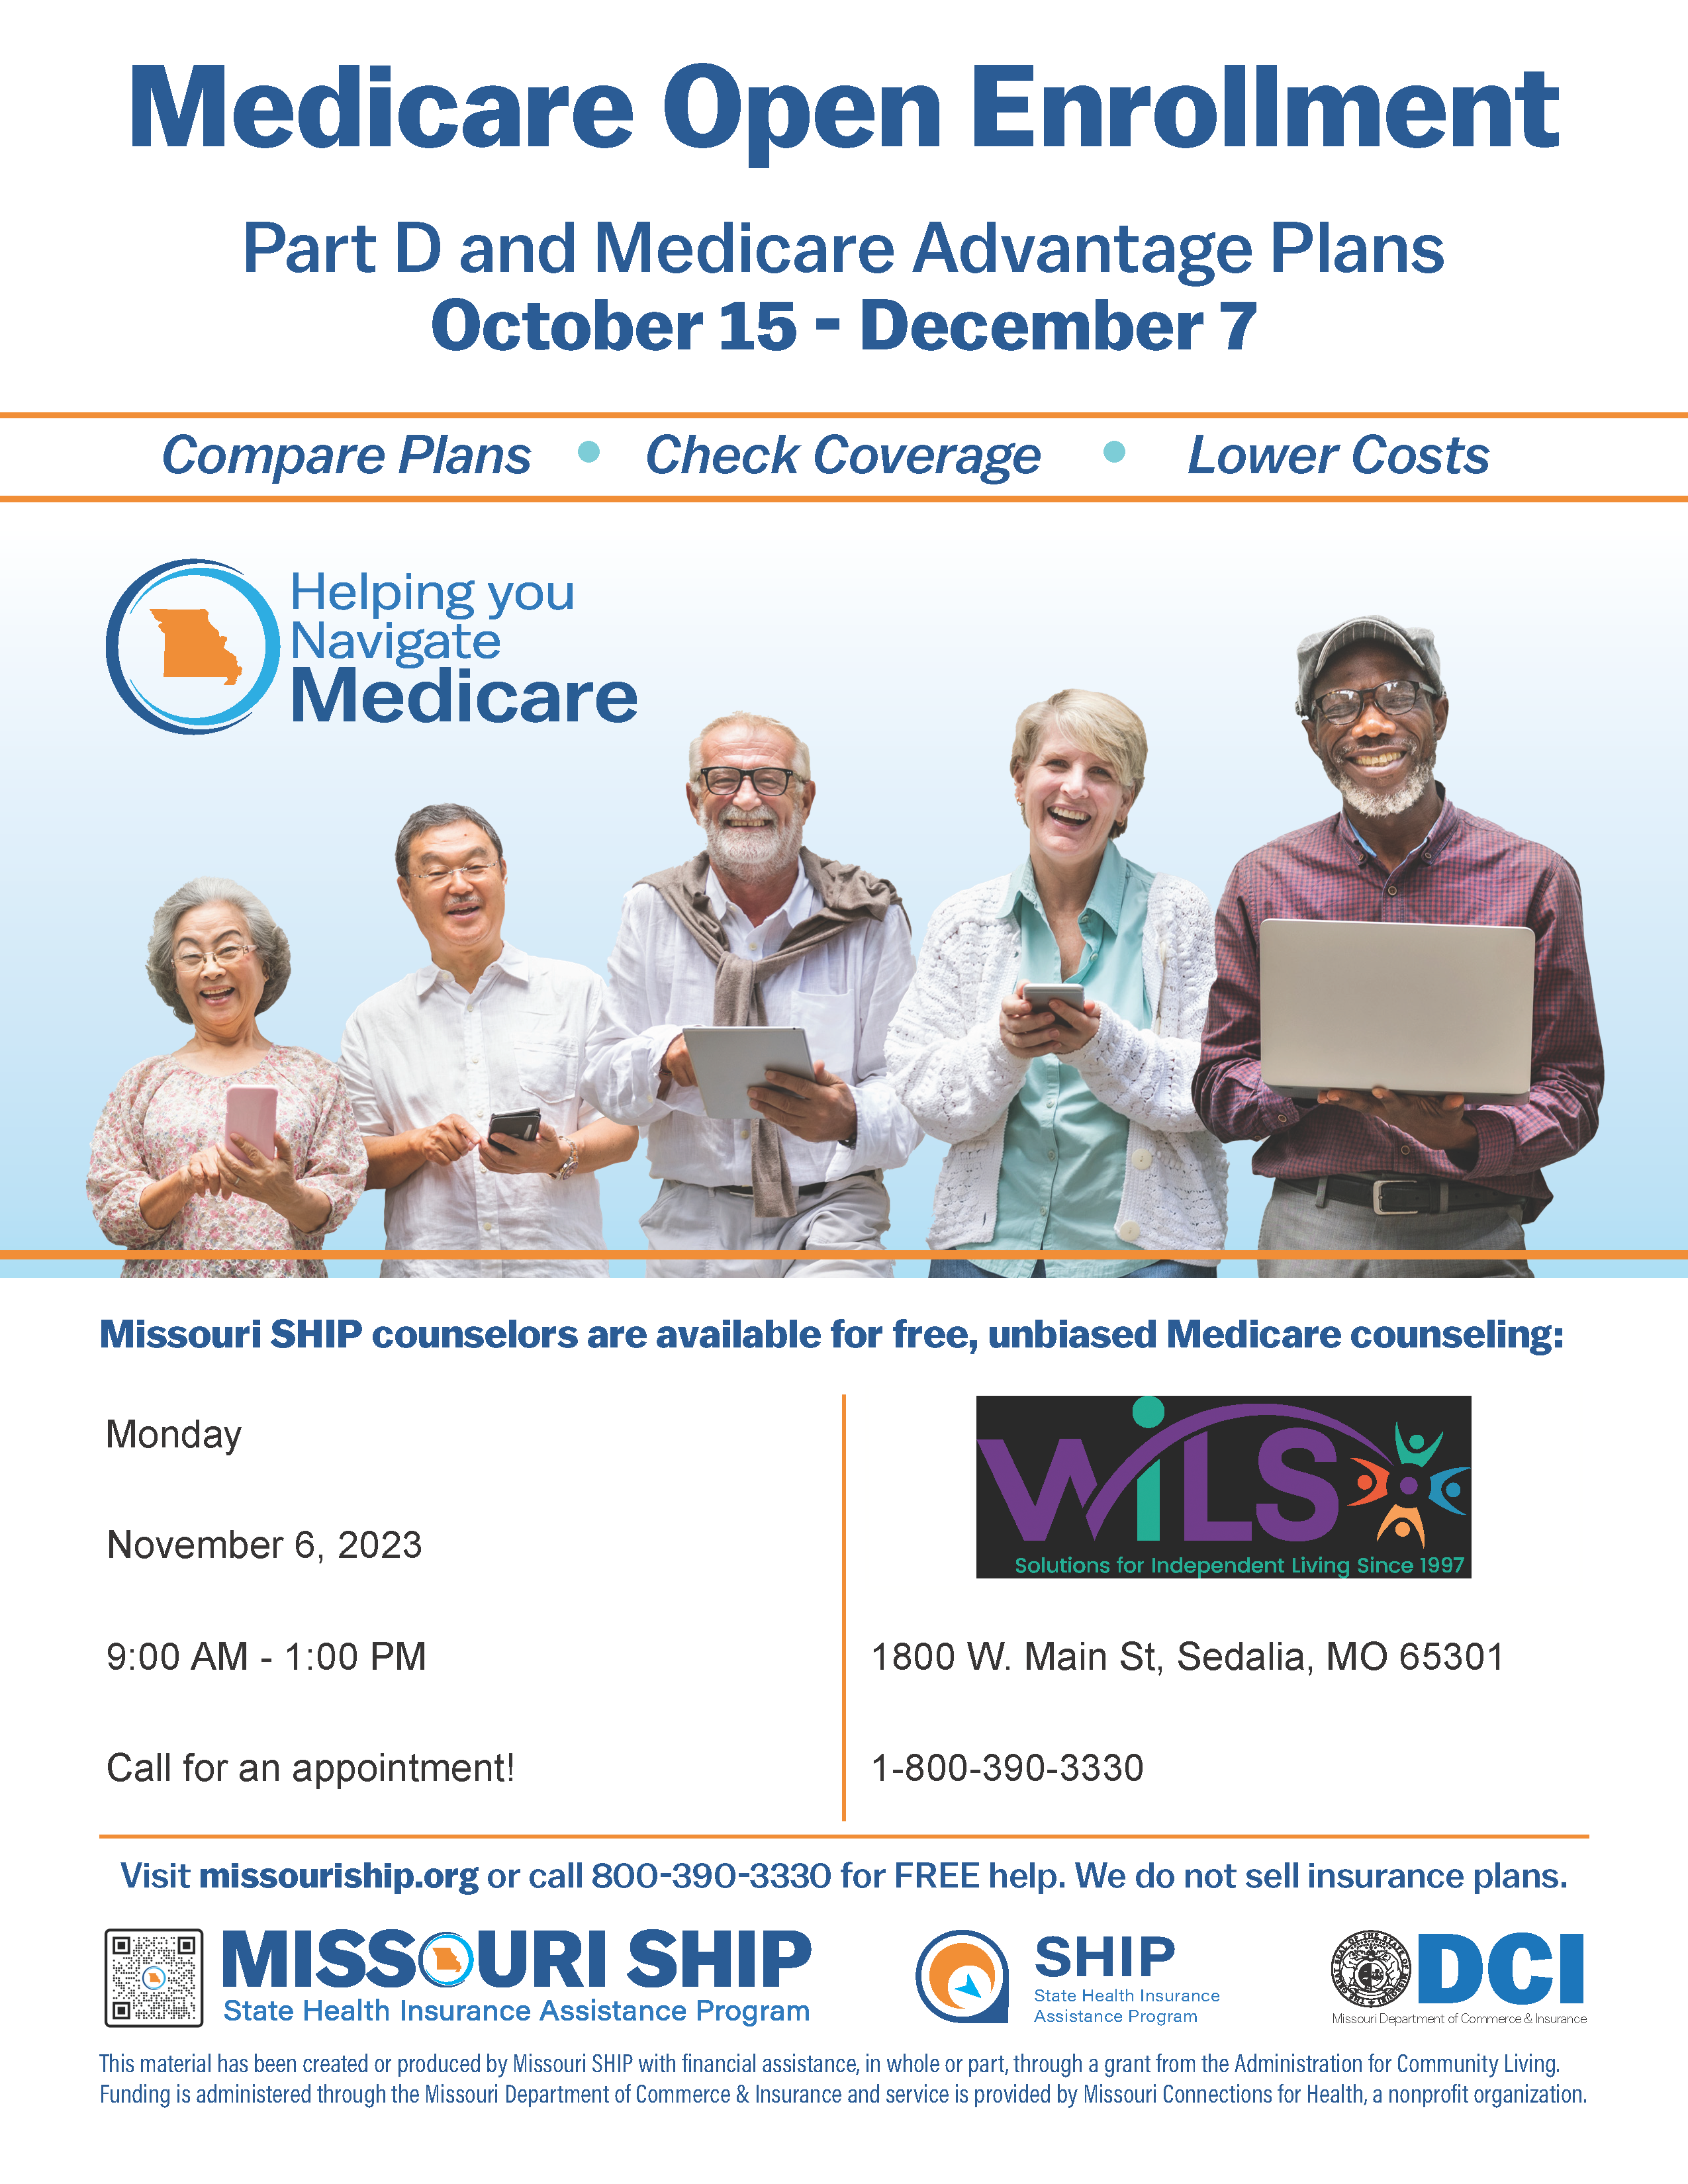 Navigate Medicare with MO SHIP at WILS @ WILS Sedalia